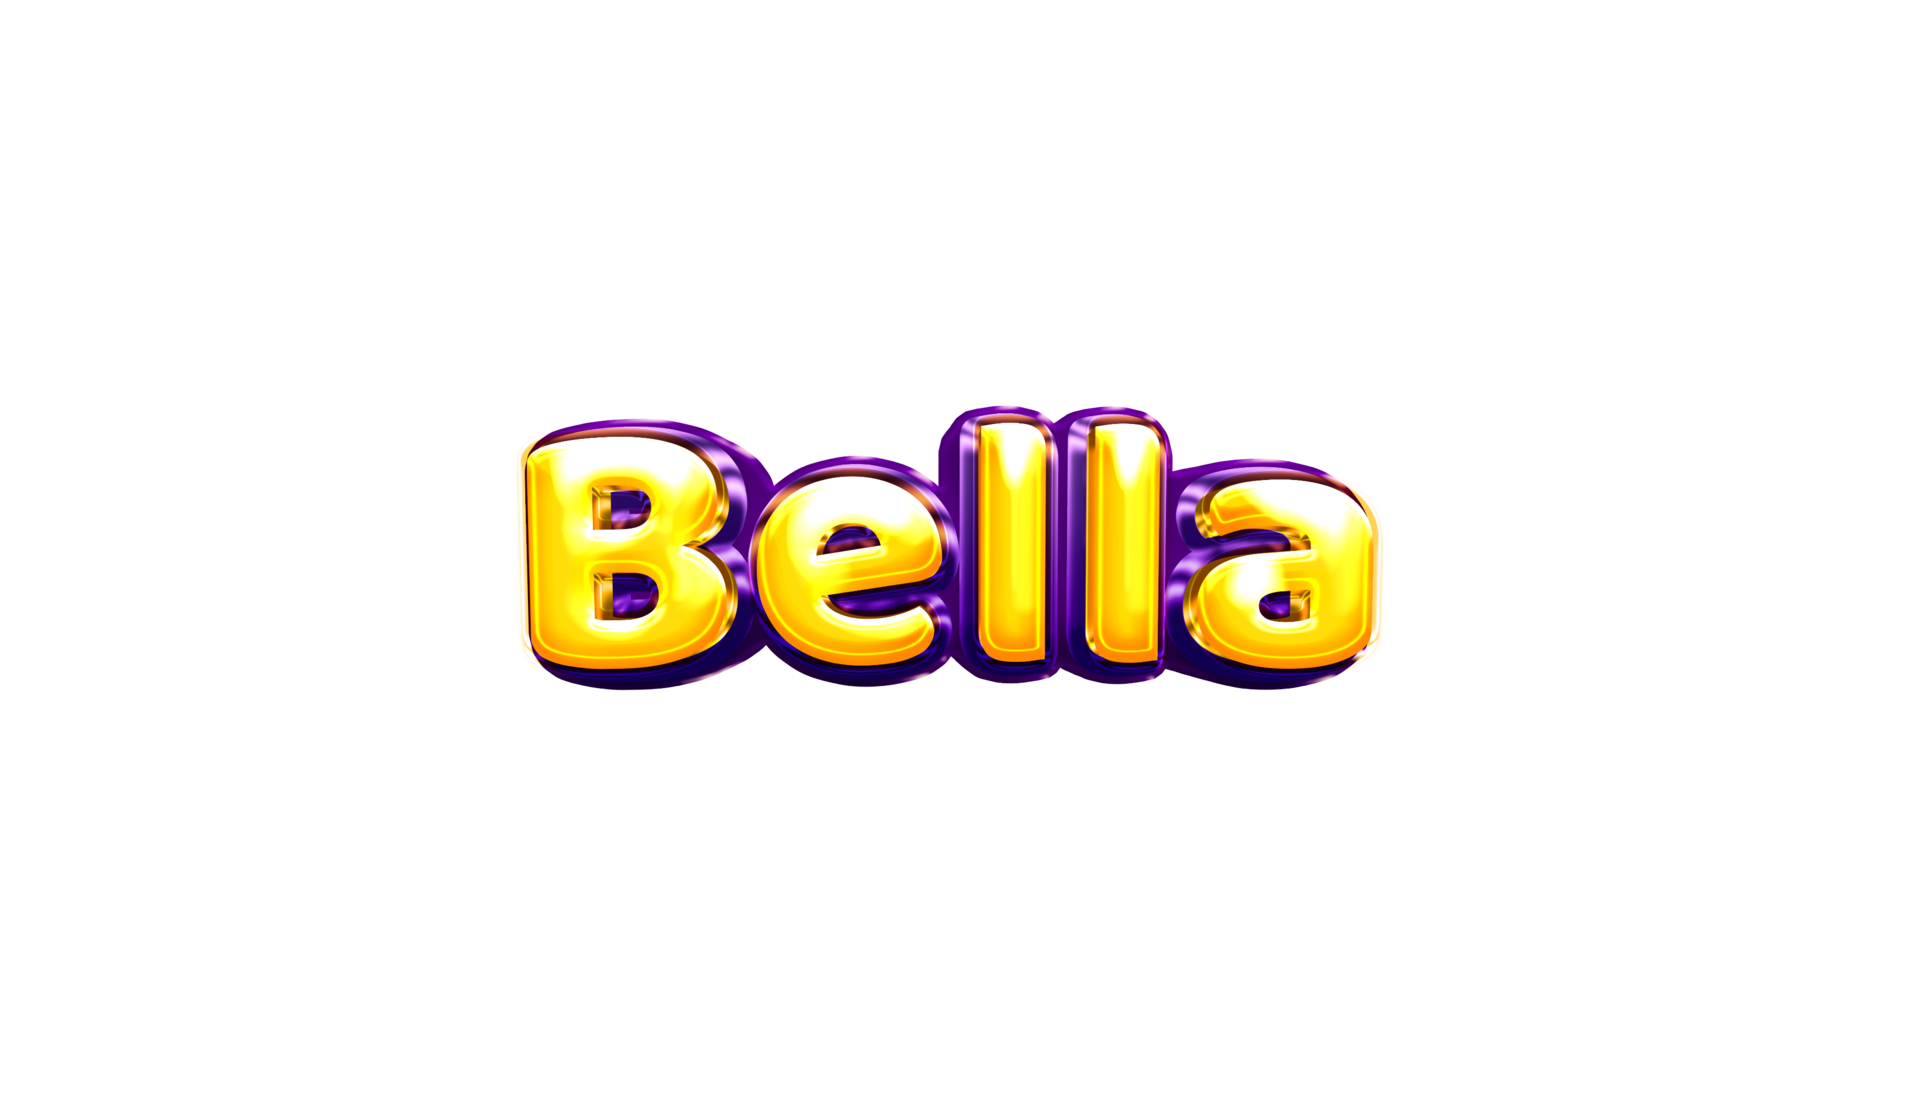 304 Bella Name Images Stock Photos  Vectors  Shutterstock